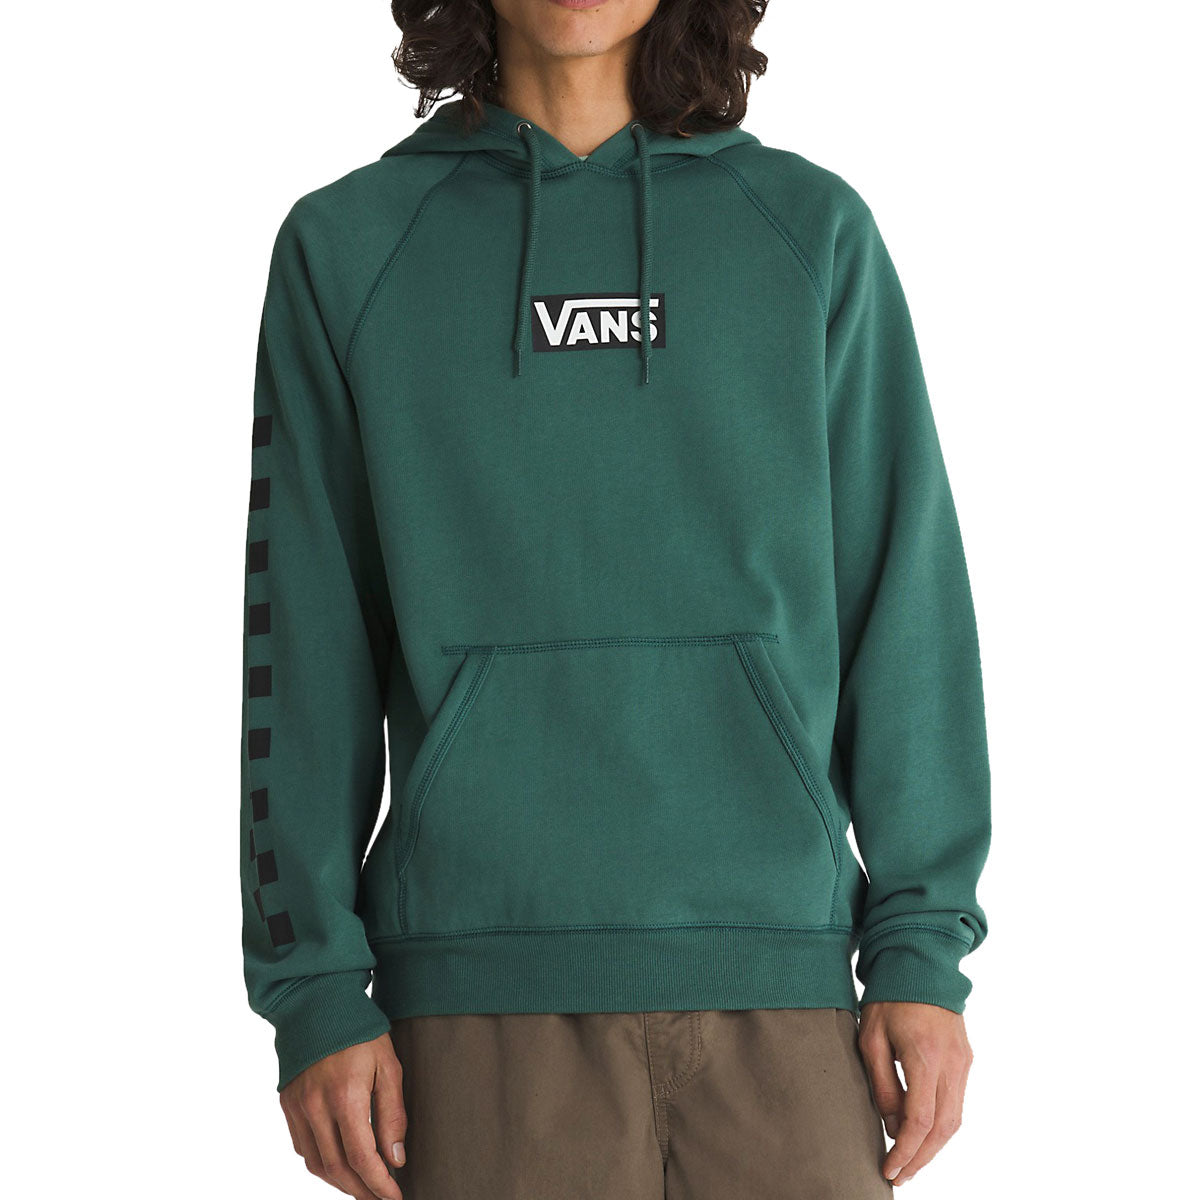 Vans Versa Standard Hoodie - Bistro Green/checkerboard image 1